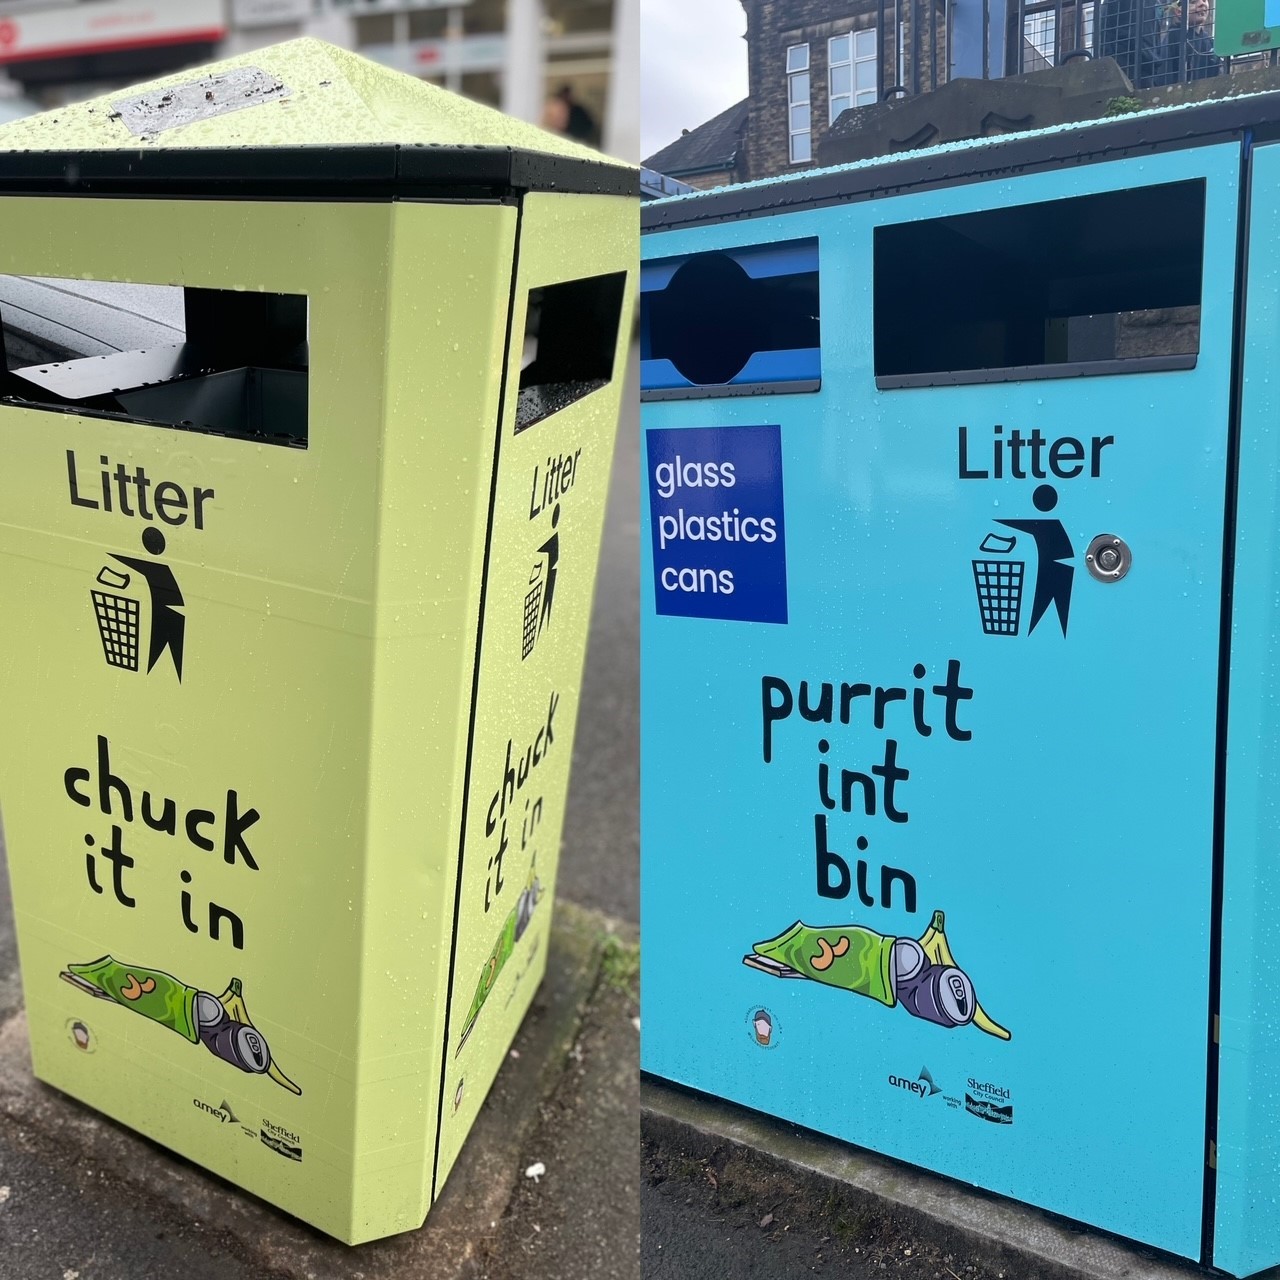 Yellow bin with 'Chuck it in' wording next to blue bin with 'Purrit int bin ' wording